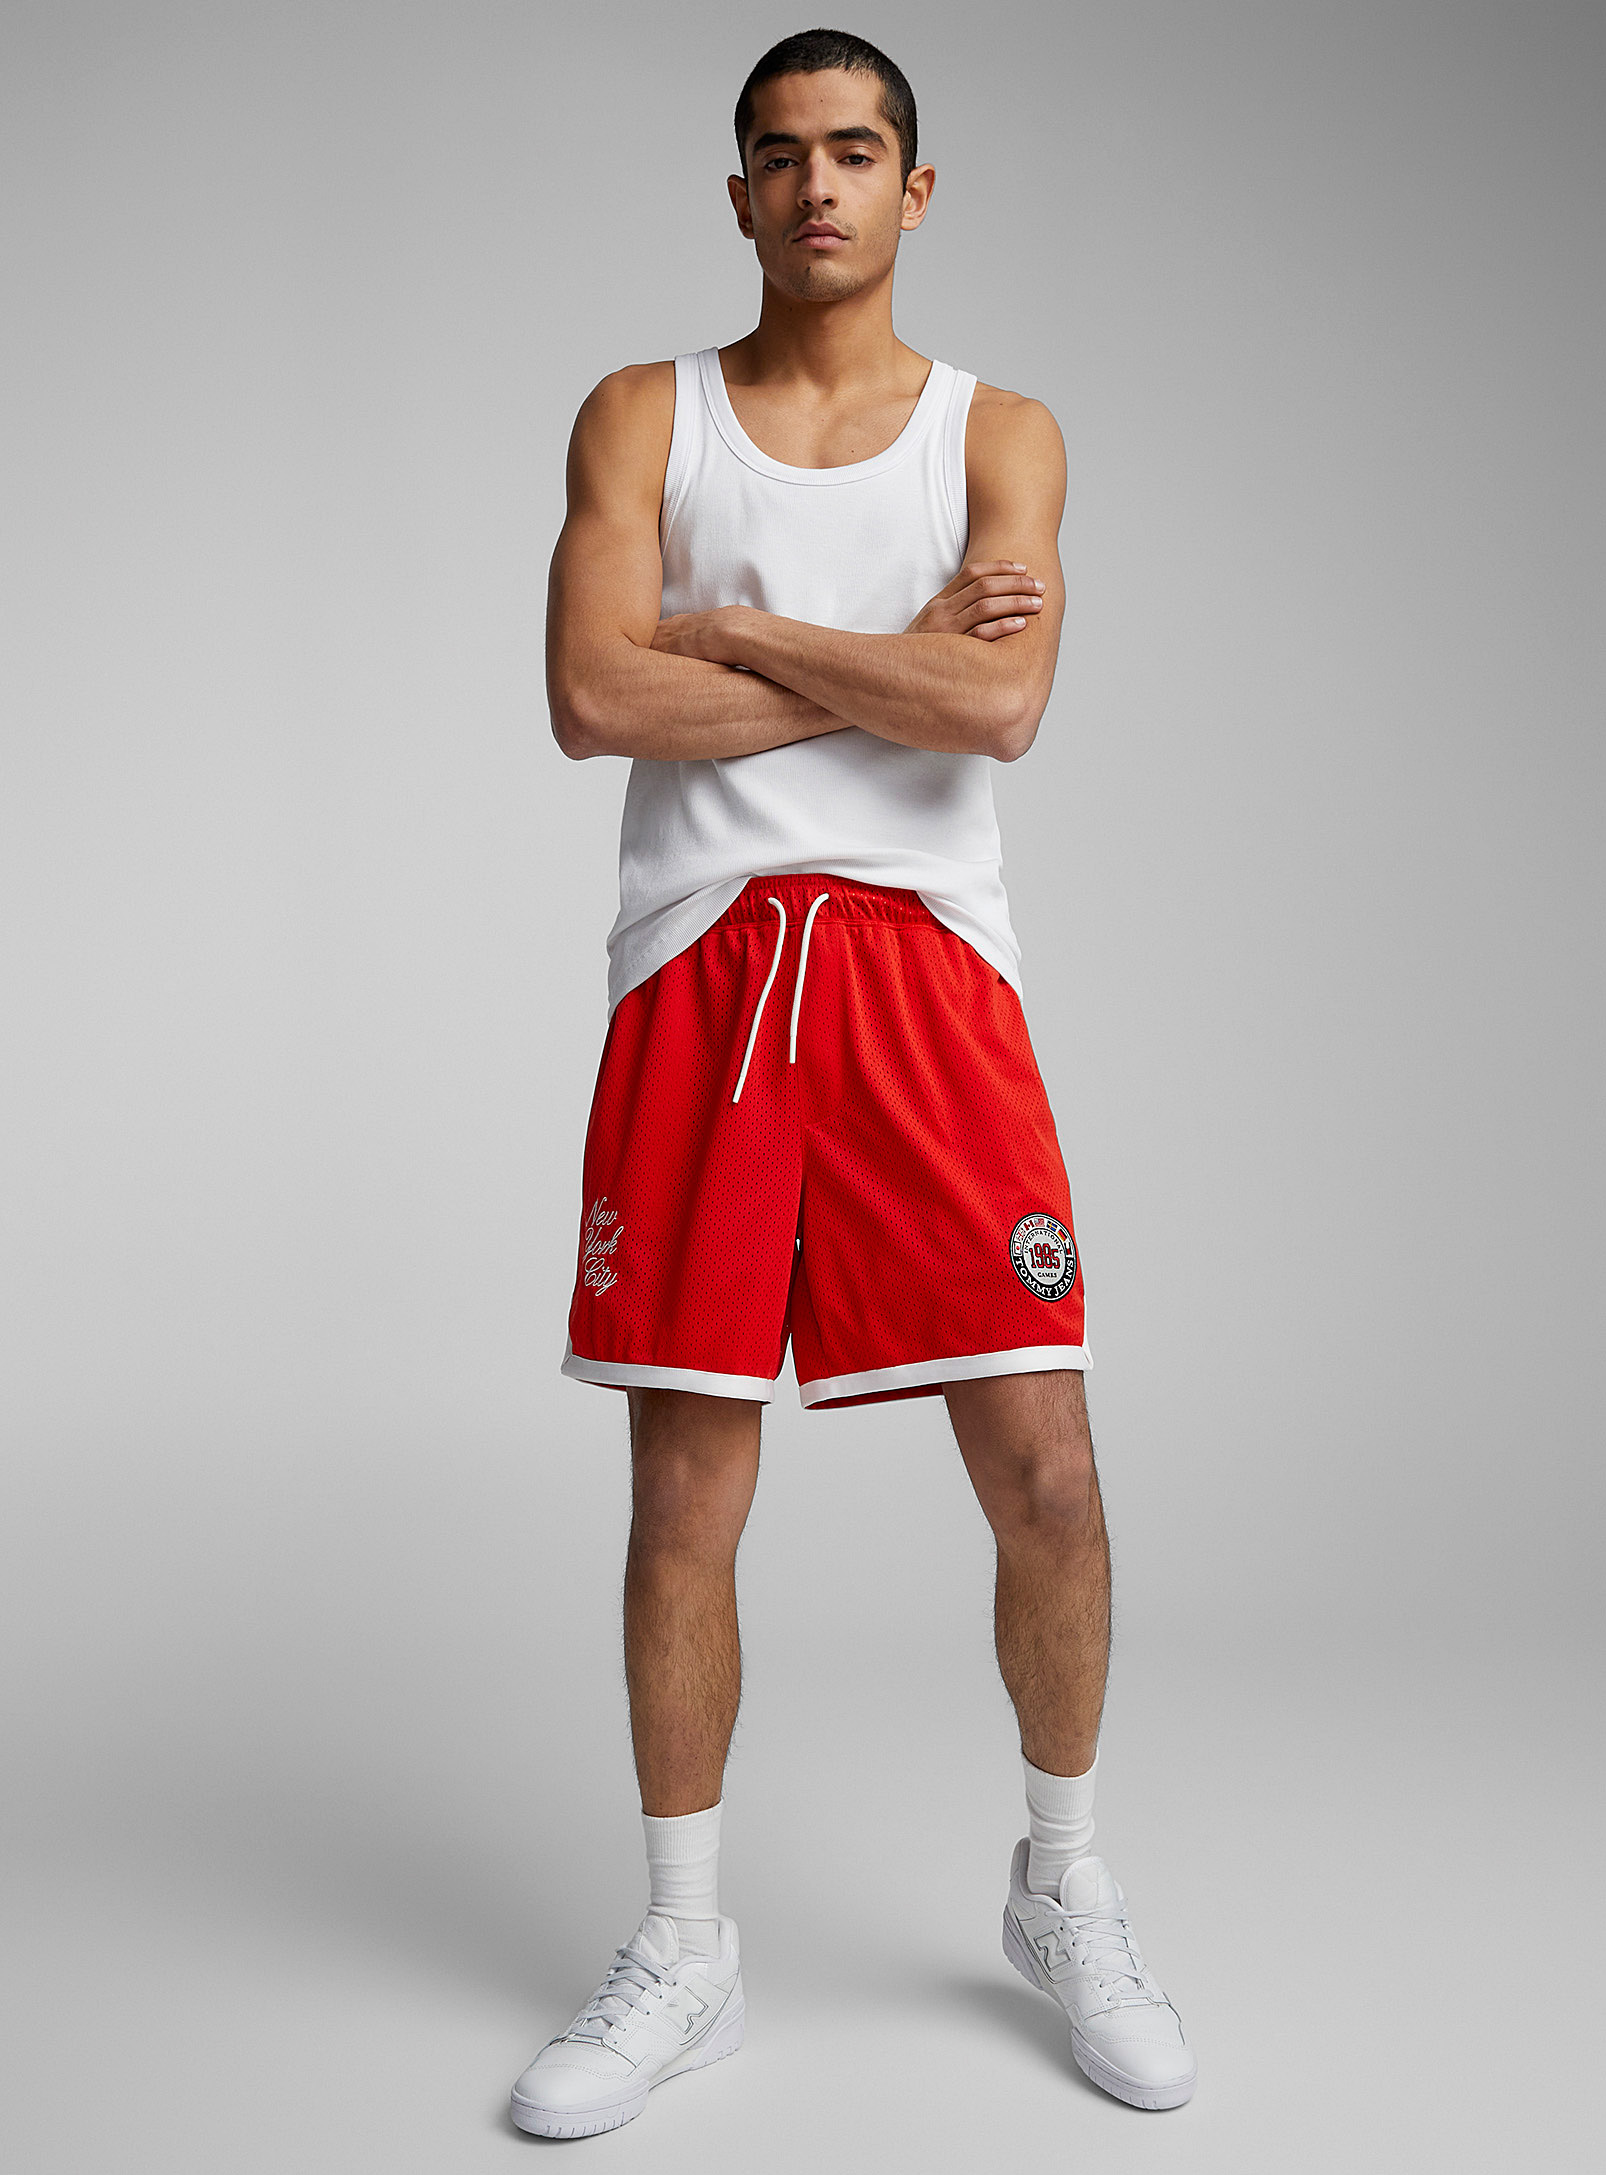 Tommy Hilfiger - Men's Basketball Bermuda Shorts